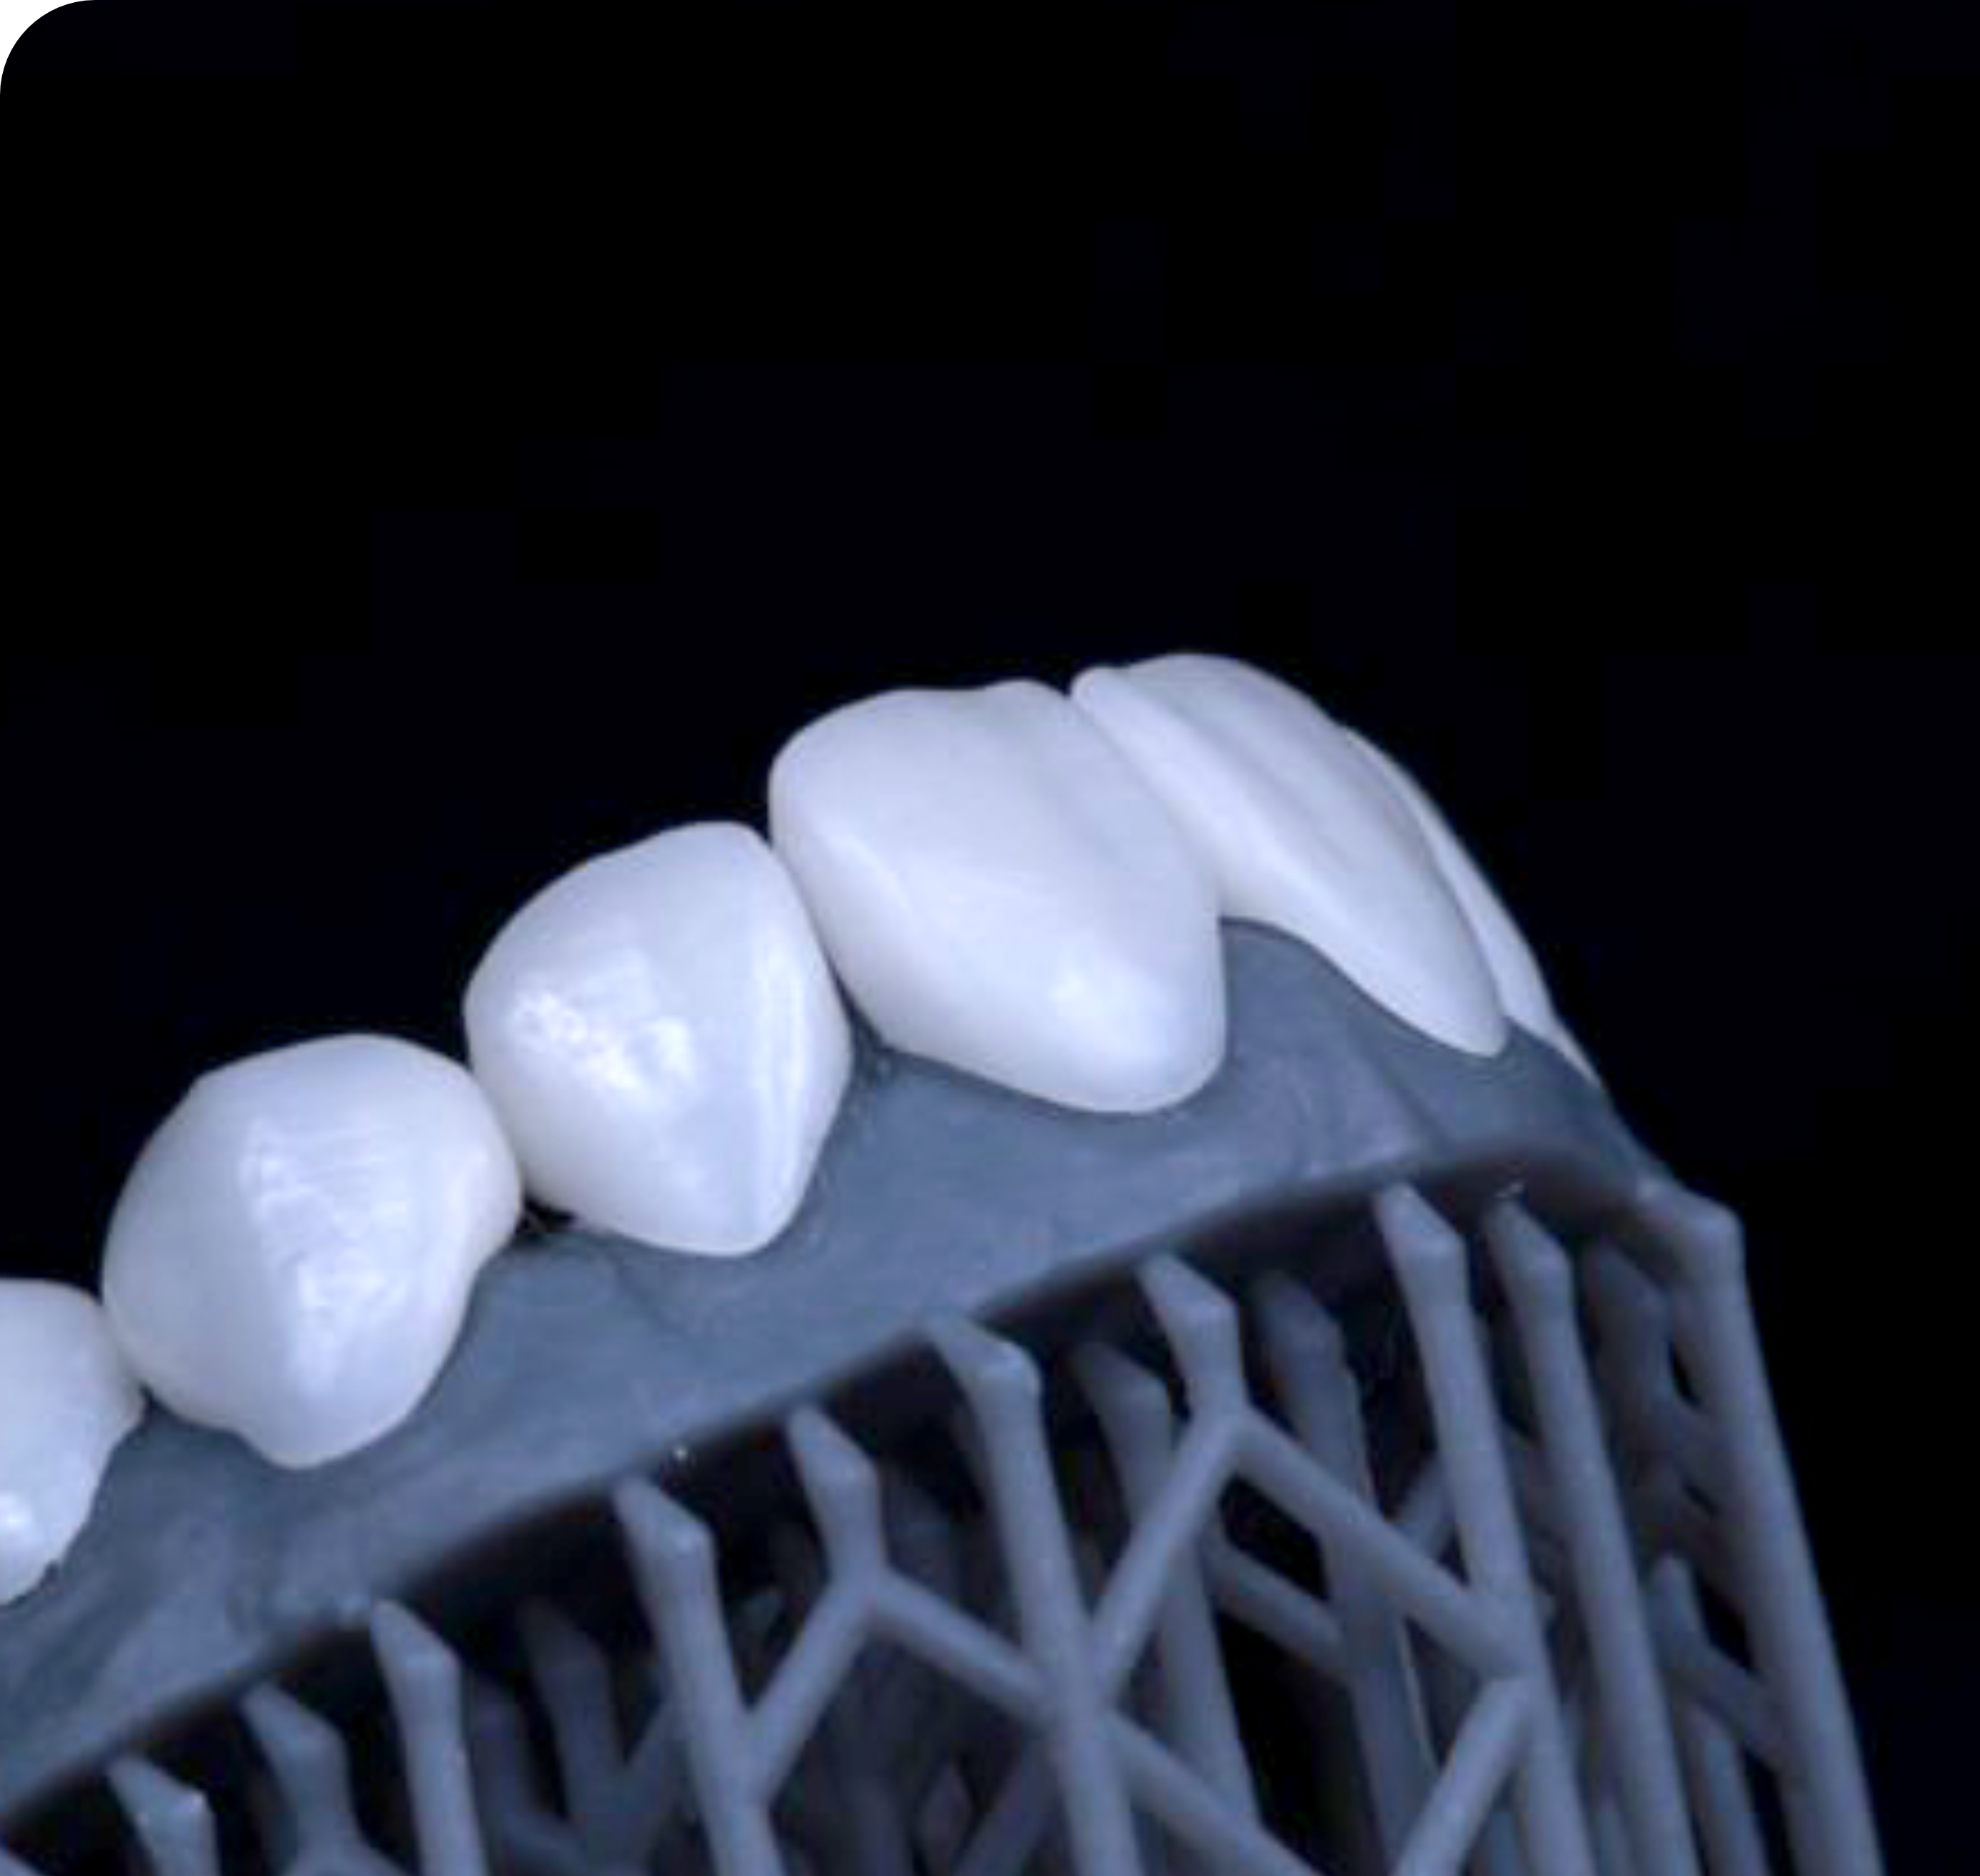 A natural-looking dental restoration created using Digital Smile Design.